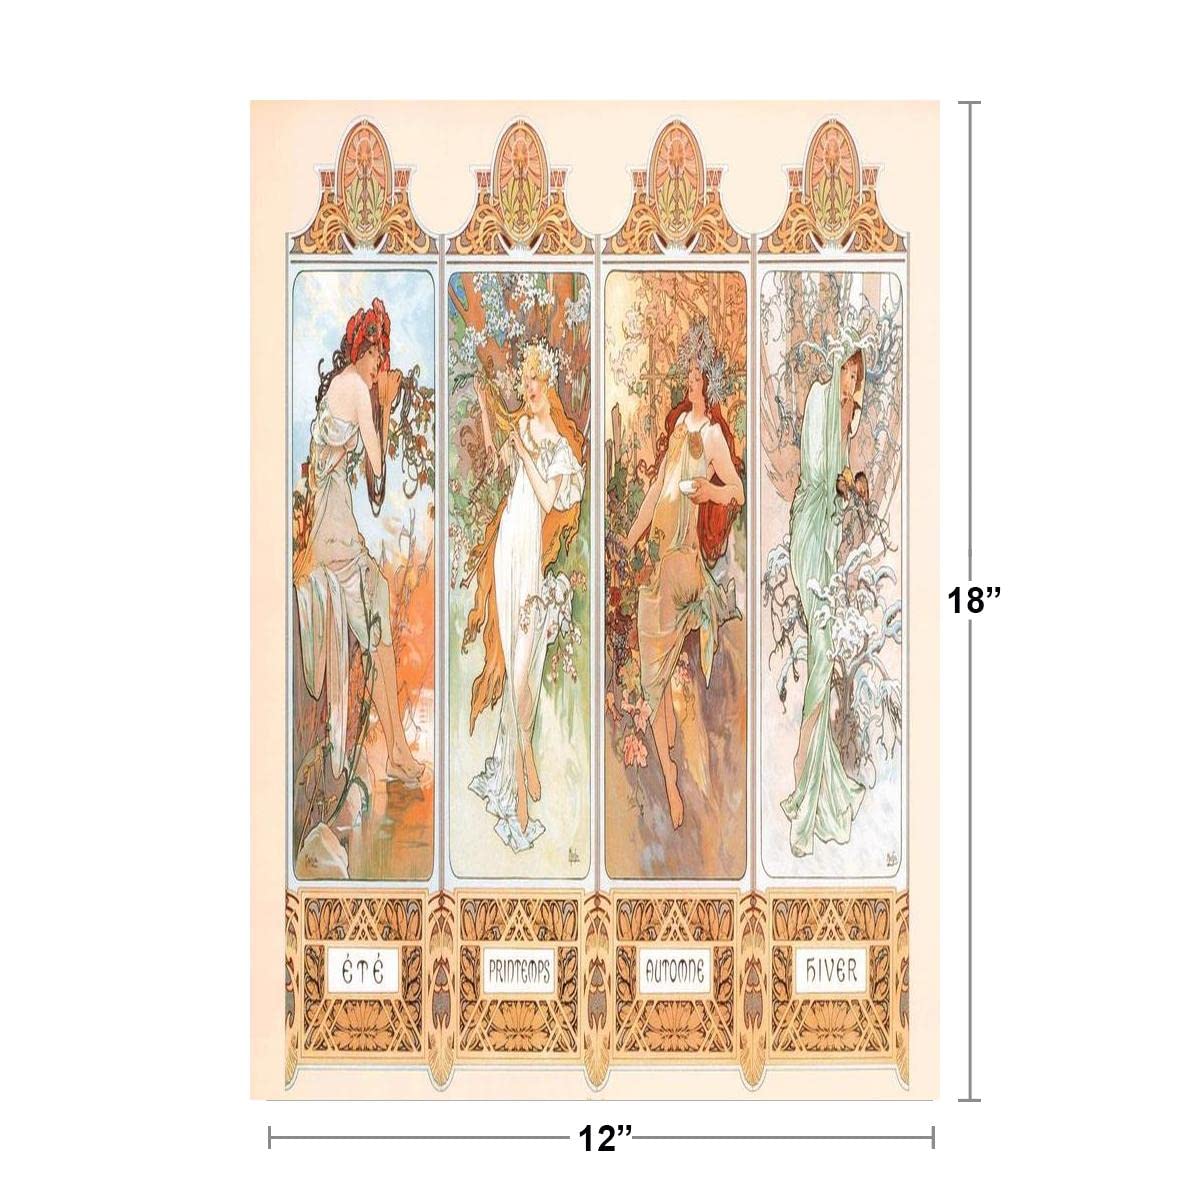 Alphonse Mucha Four Seasons Series Alphonse Mucha Art Nouveau Art Prints Mucha Print Art Nouveau Decor Vintage Advertisements Art Poster Ornamental Design Mucha Cool Wall Decor Art Print Poster 12x18